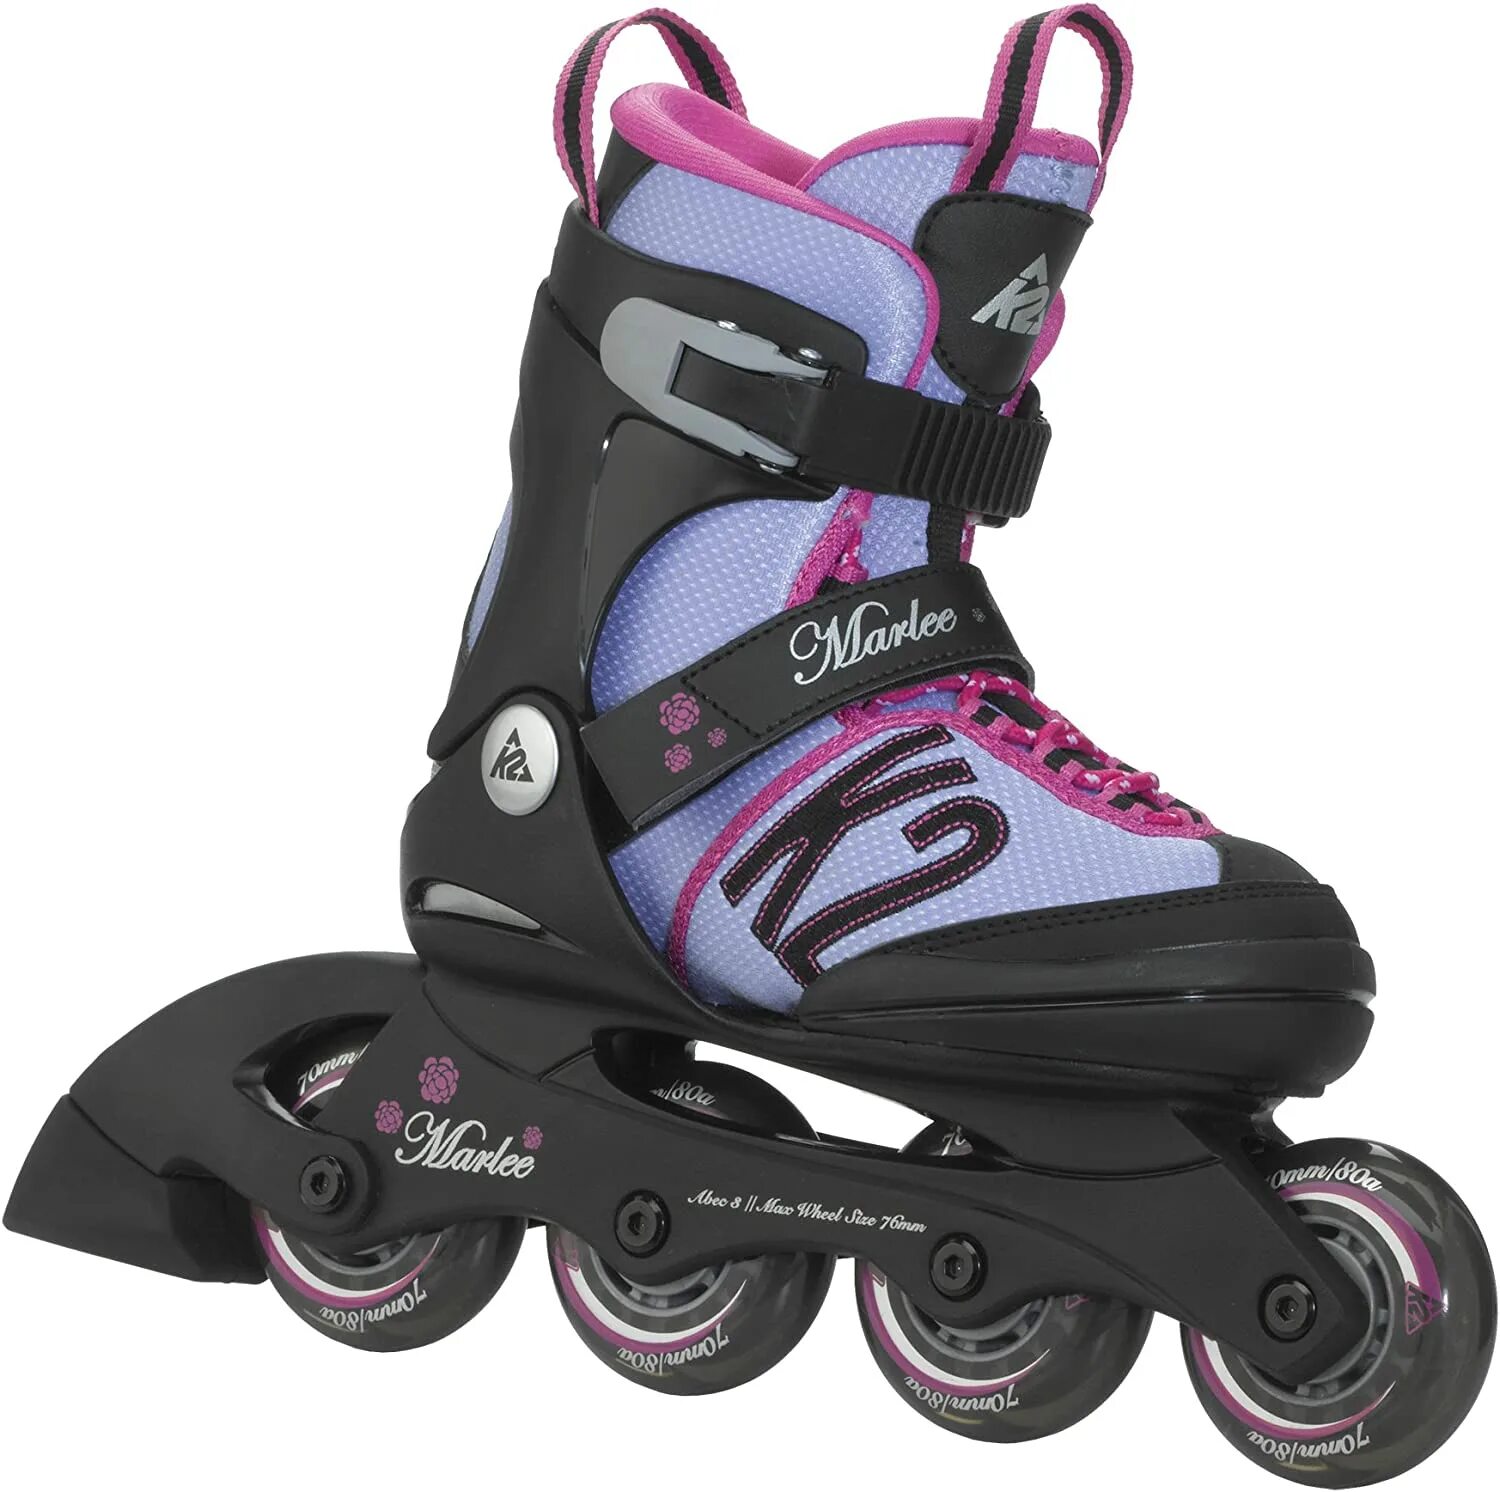 K2 Skate. K2 Marlee фиолетовые. Коньки роликовые k2 Marlee Pro детские. Роликовые коньки к2 женские.